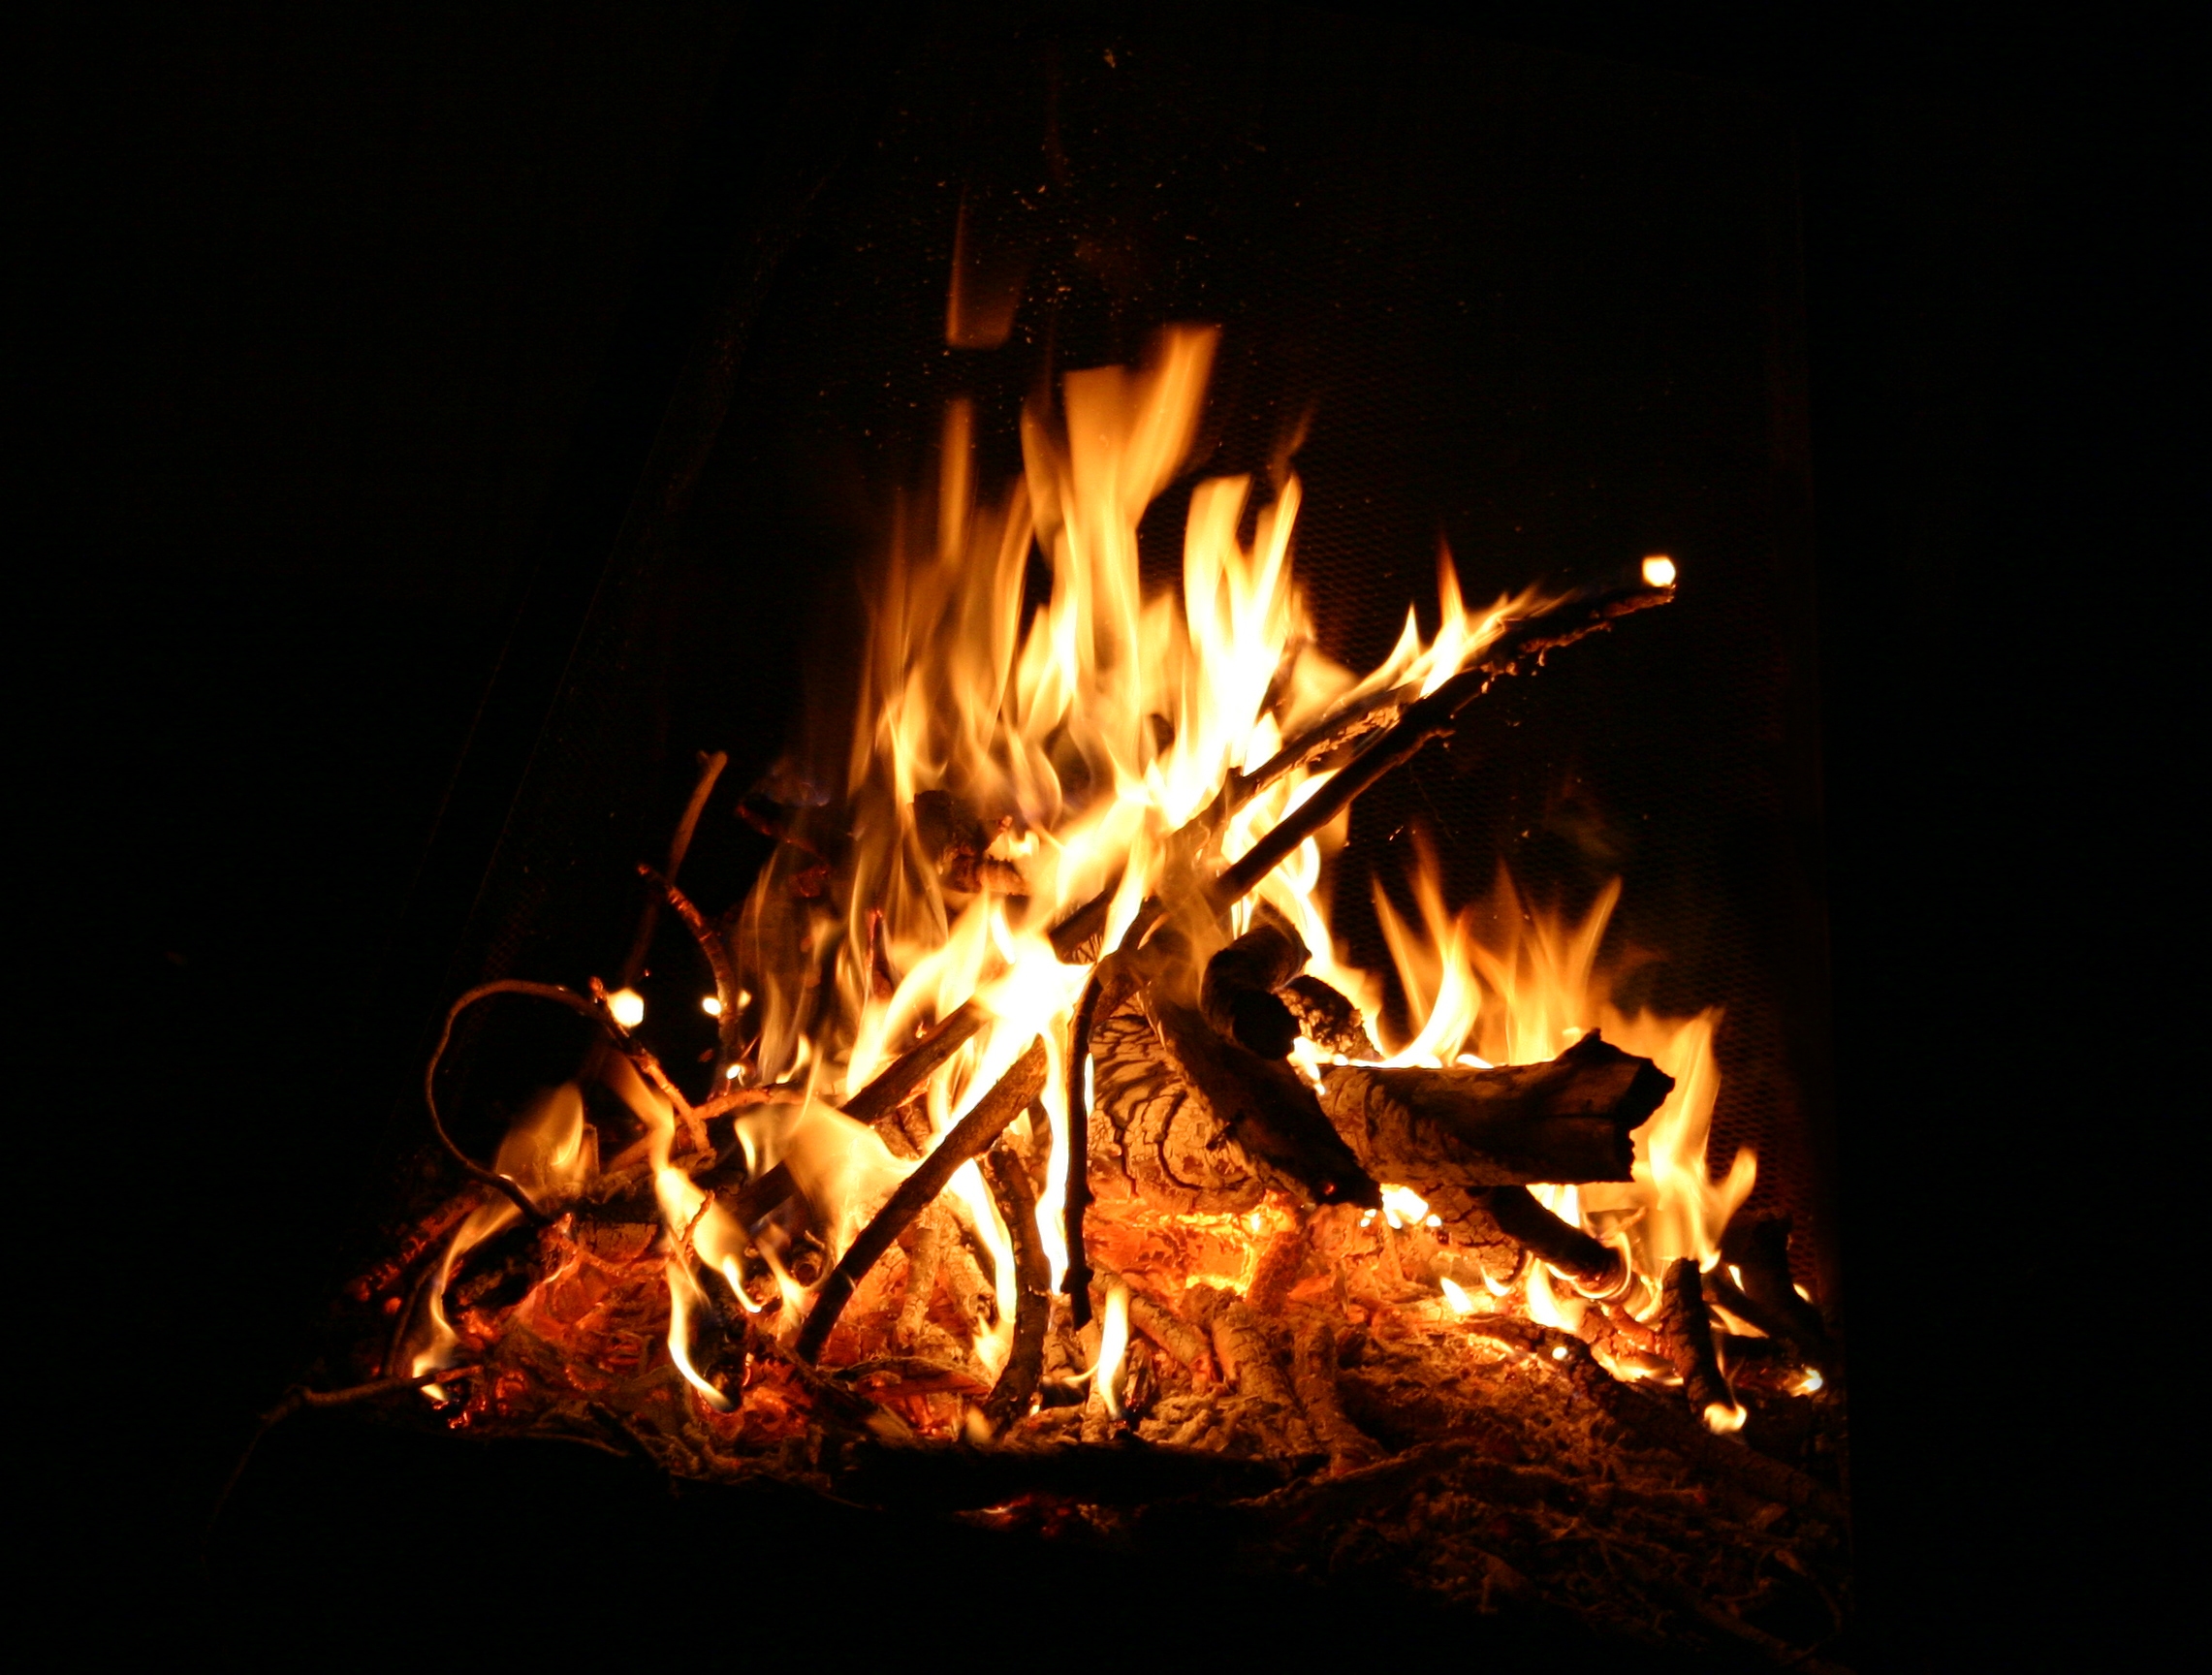 File:Camp fire.jpg - Wikimedia Commons